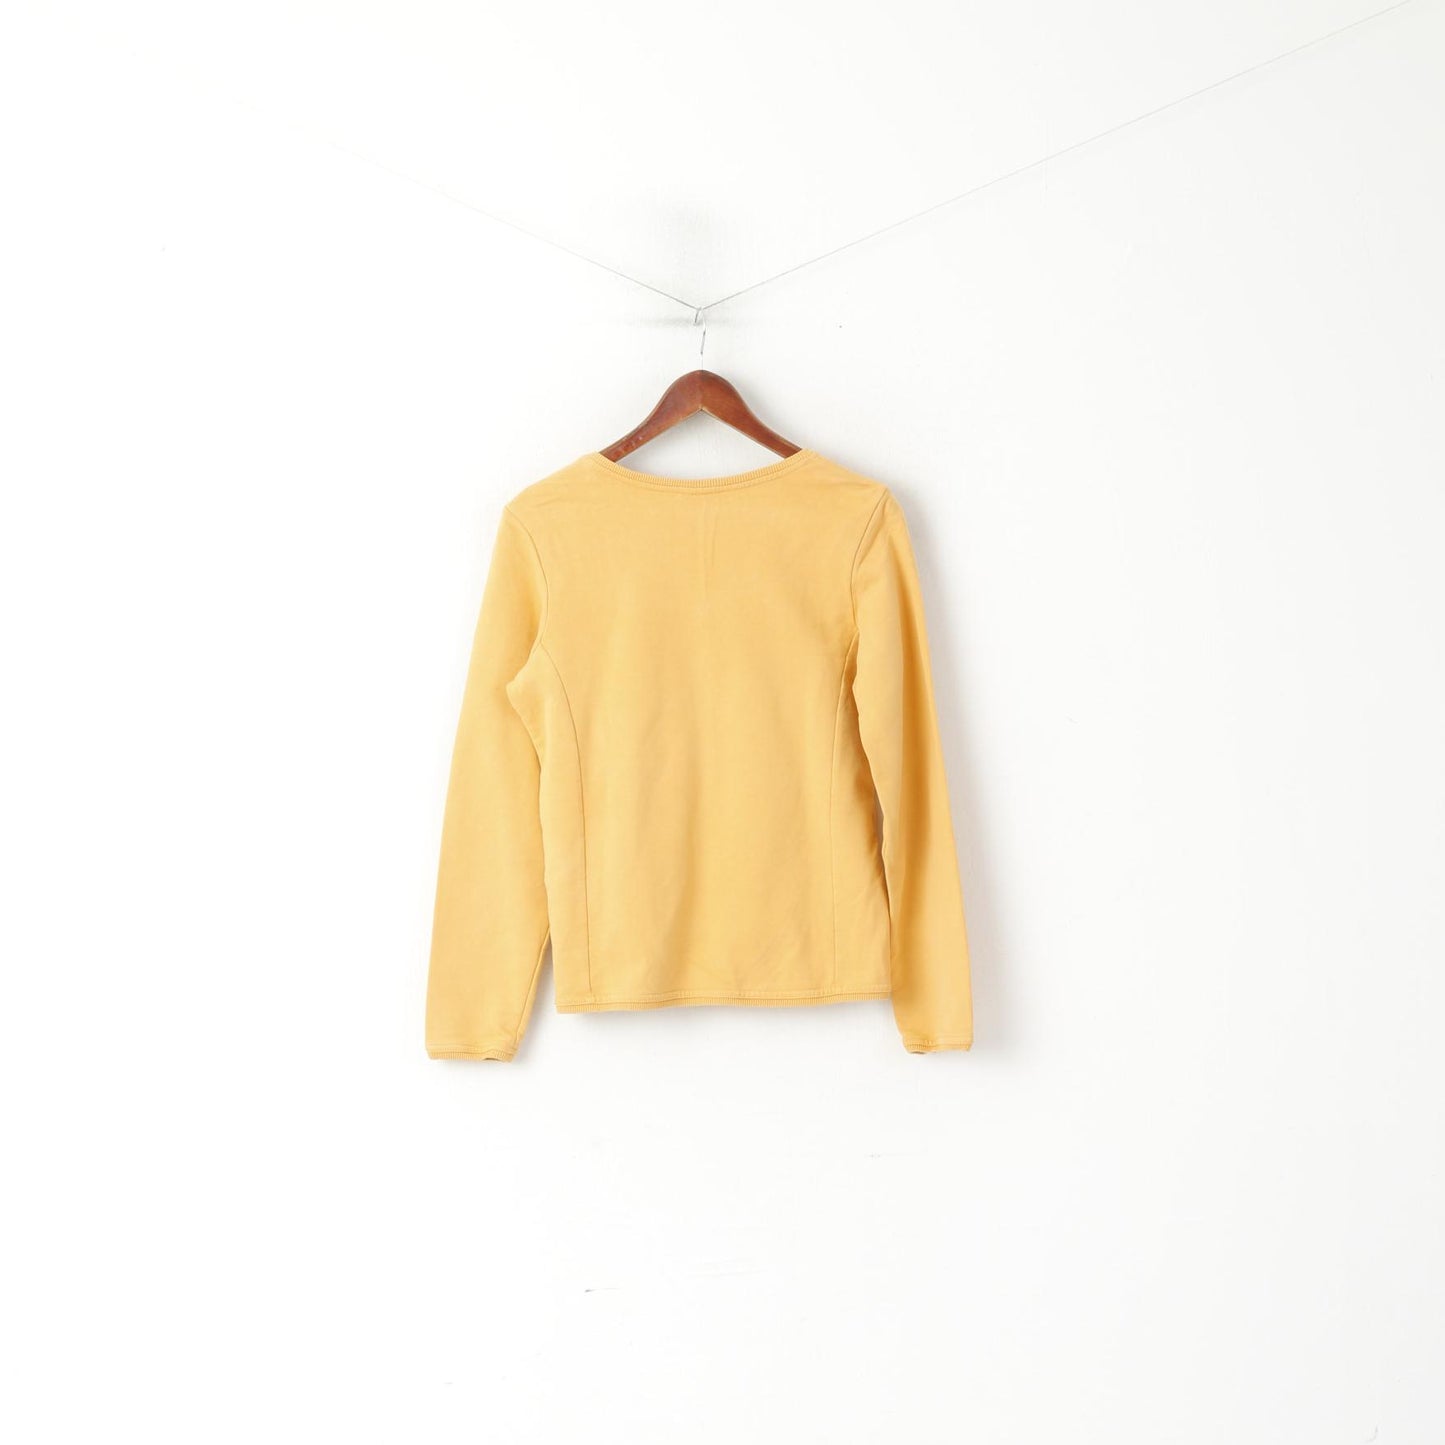 Adidas Women M Sweatshirt Orange Cotton Vintage V Neck Cropped Sport Top